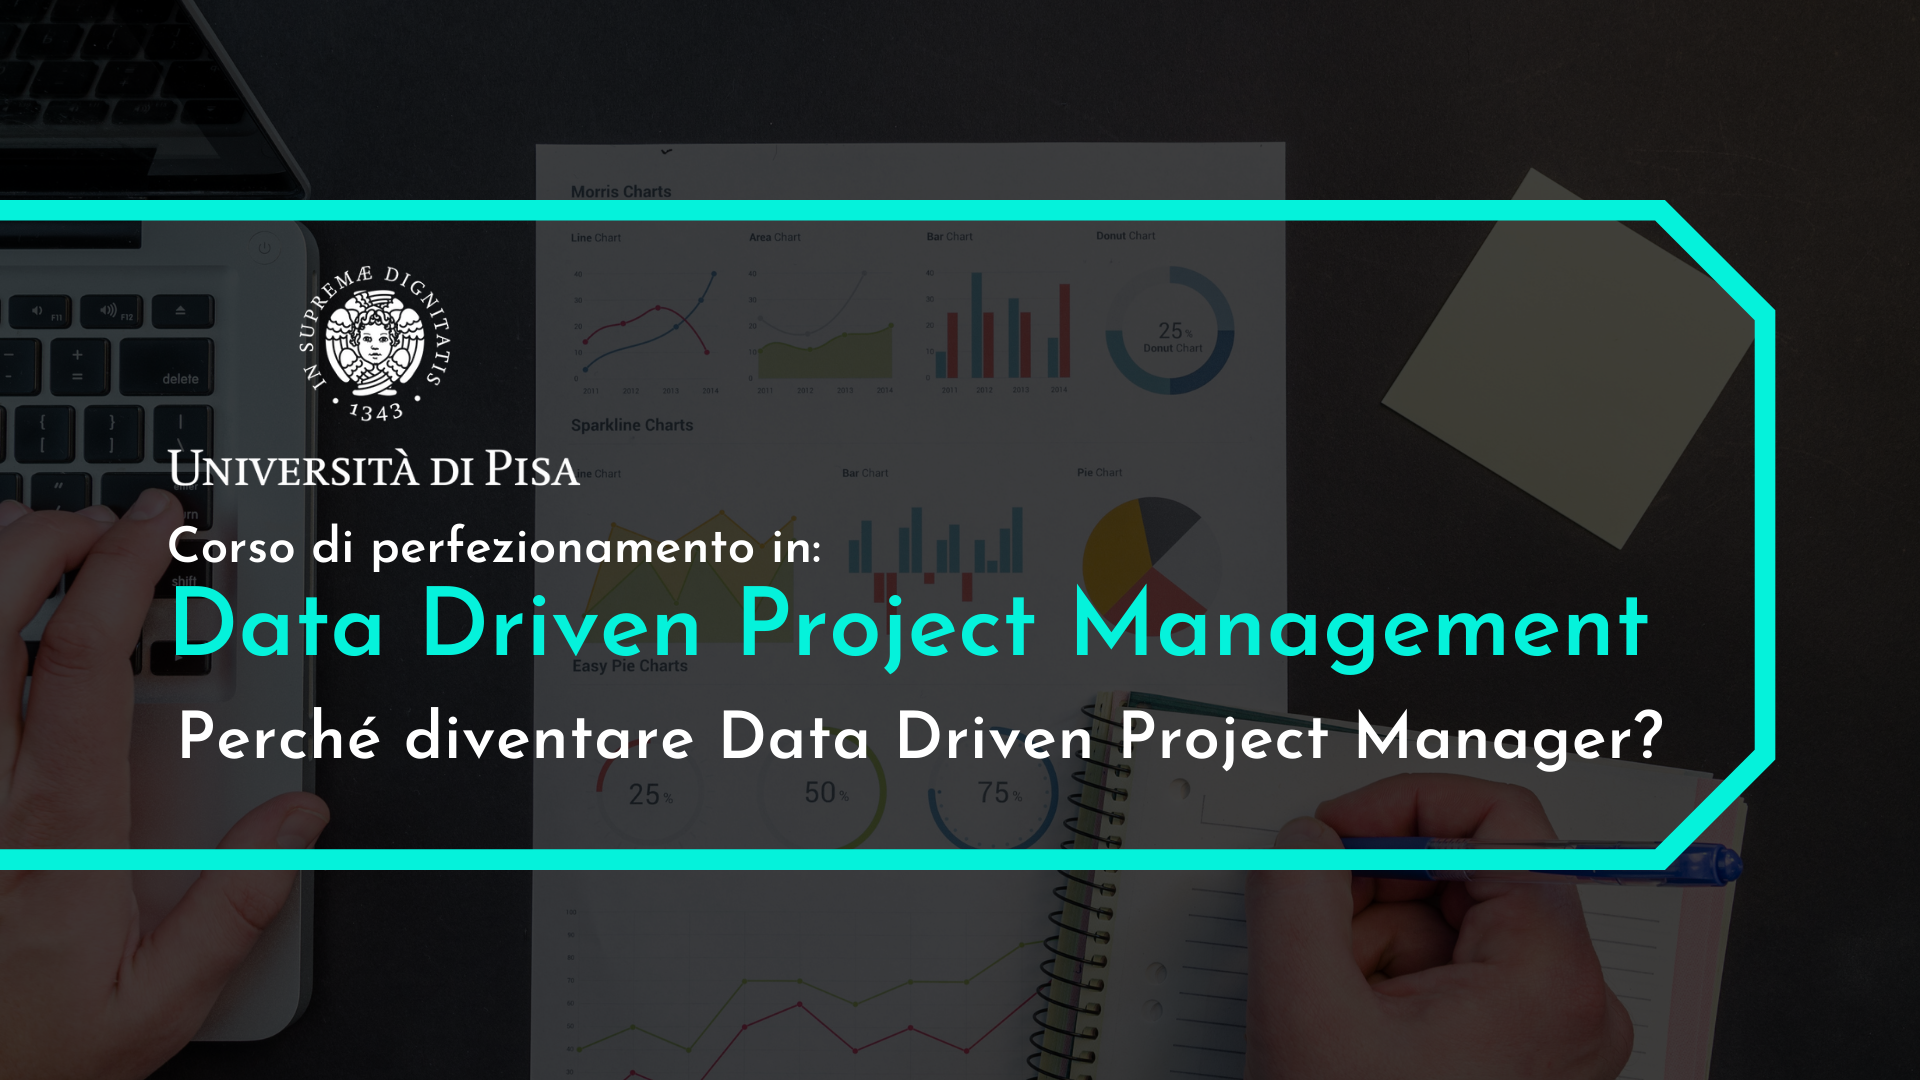 Perché diventare data driven project manager